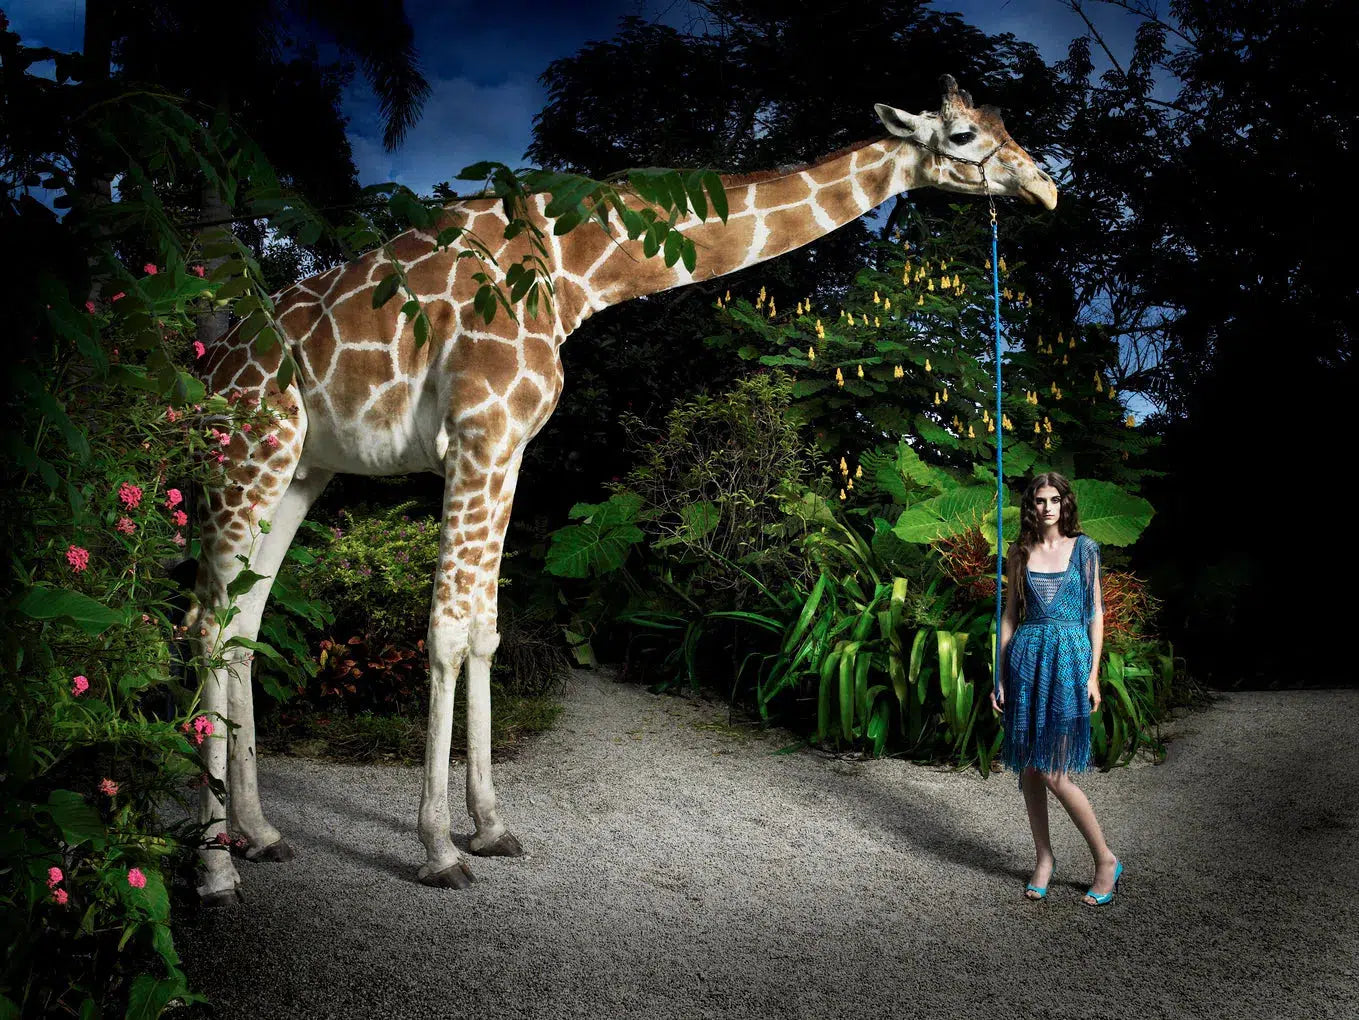 Pet Giraffe, by Greg Lotus-PurePhoto